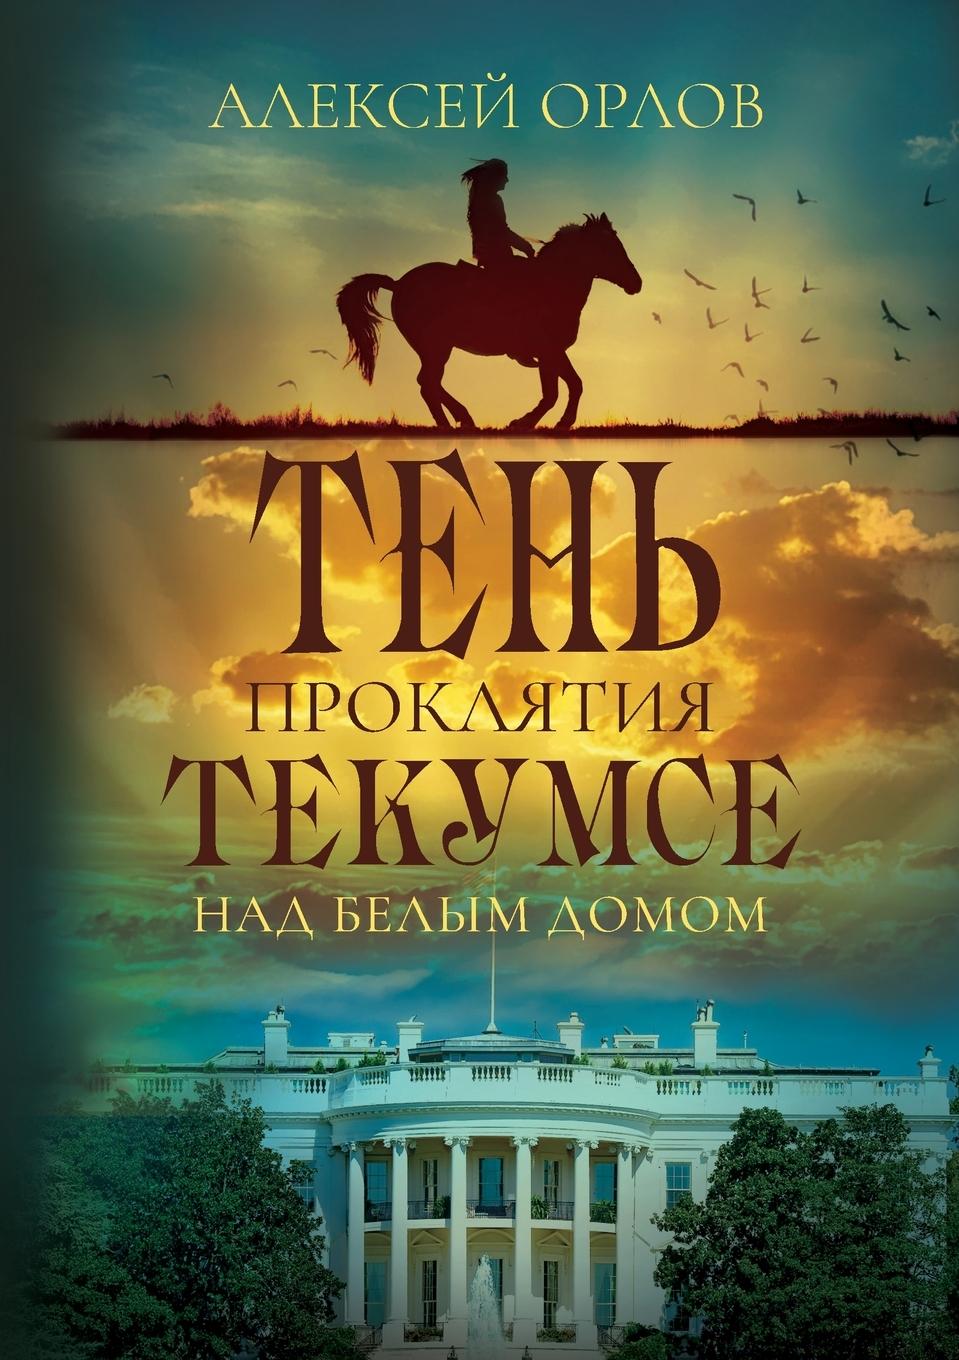 The Shadow of Tecumseh Curse over the White House - Orlov, Alexei